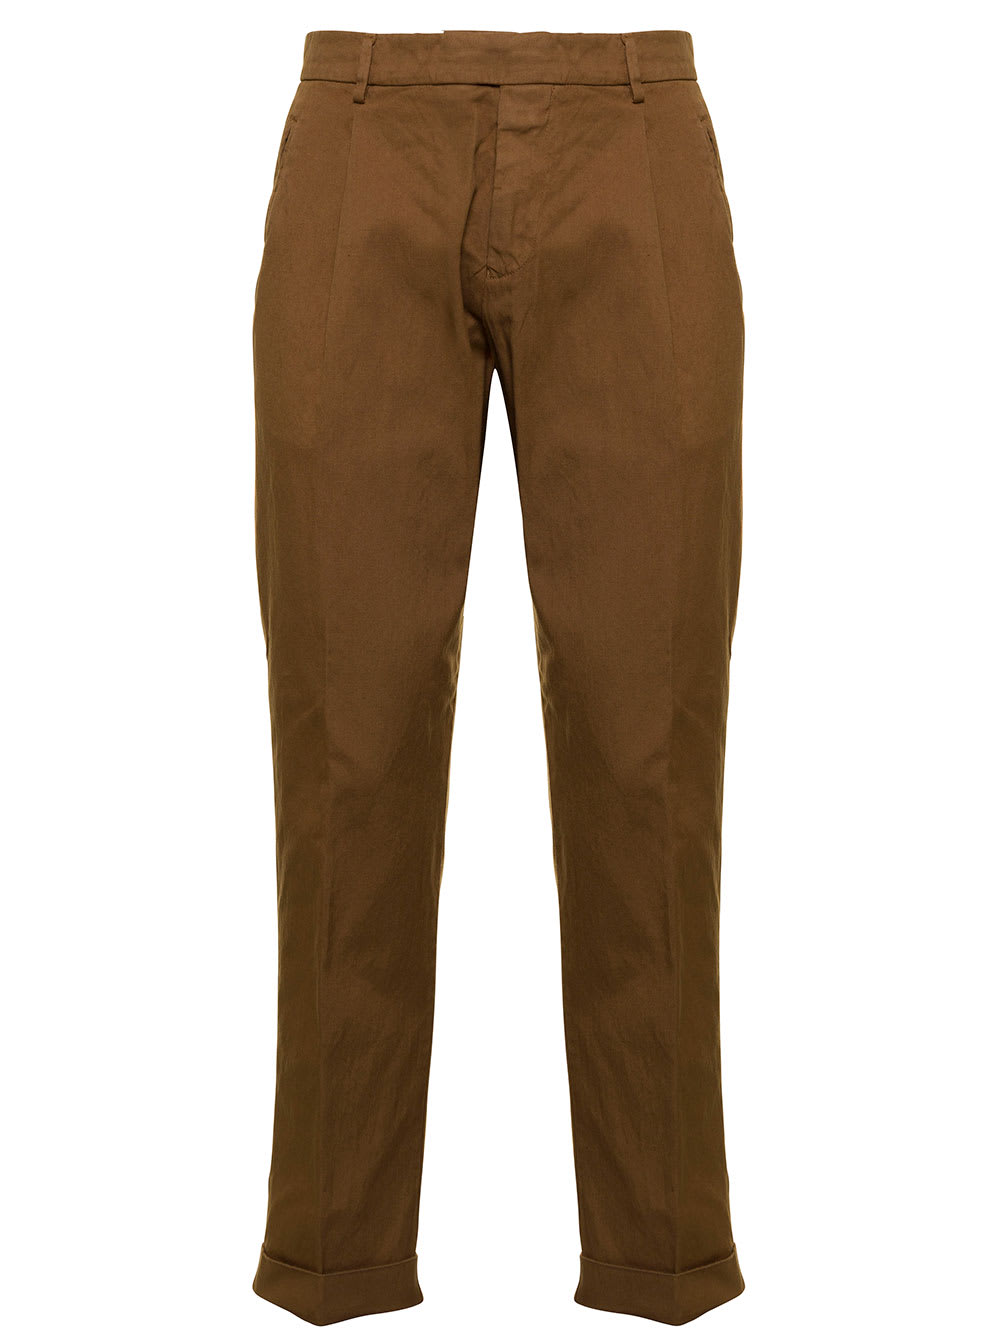 Berwich Man Brown Cotton And Linen Pants